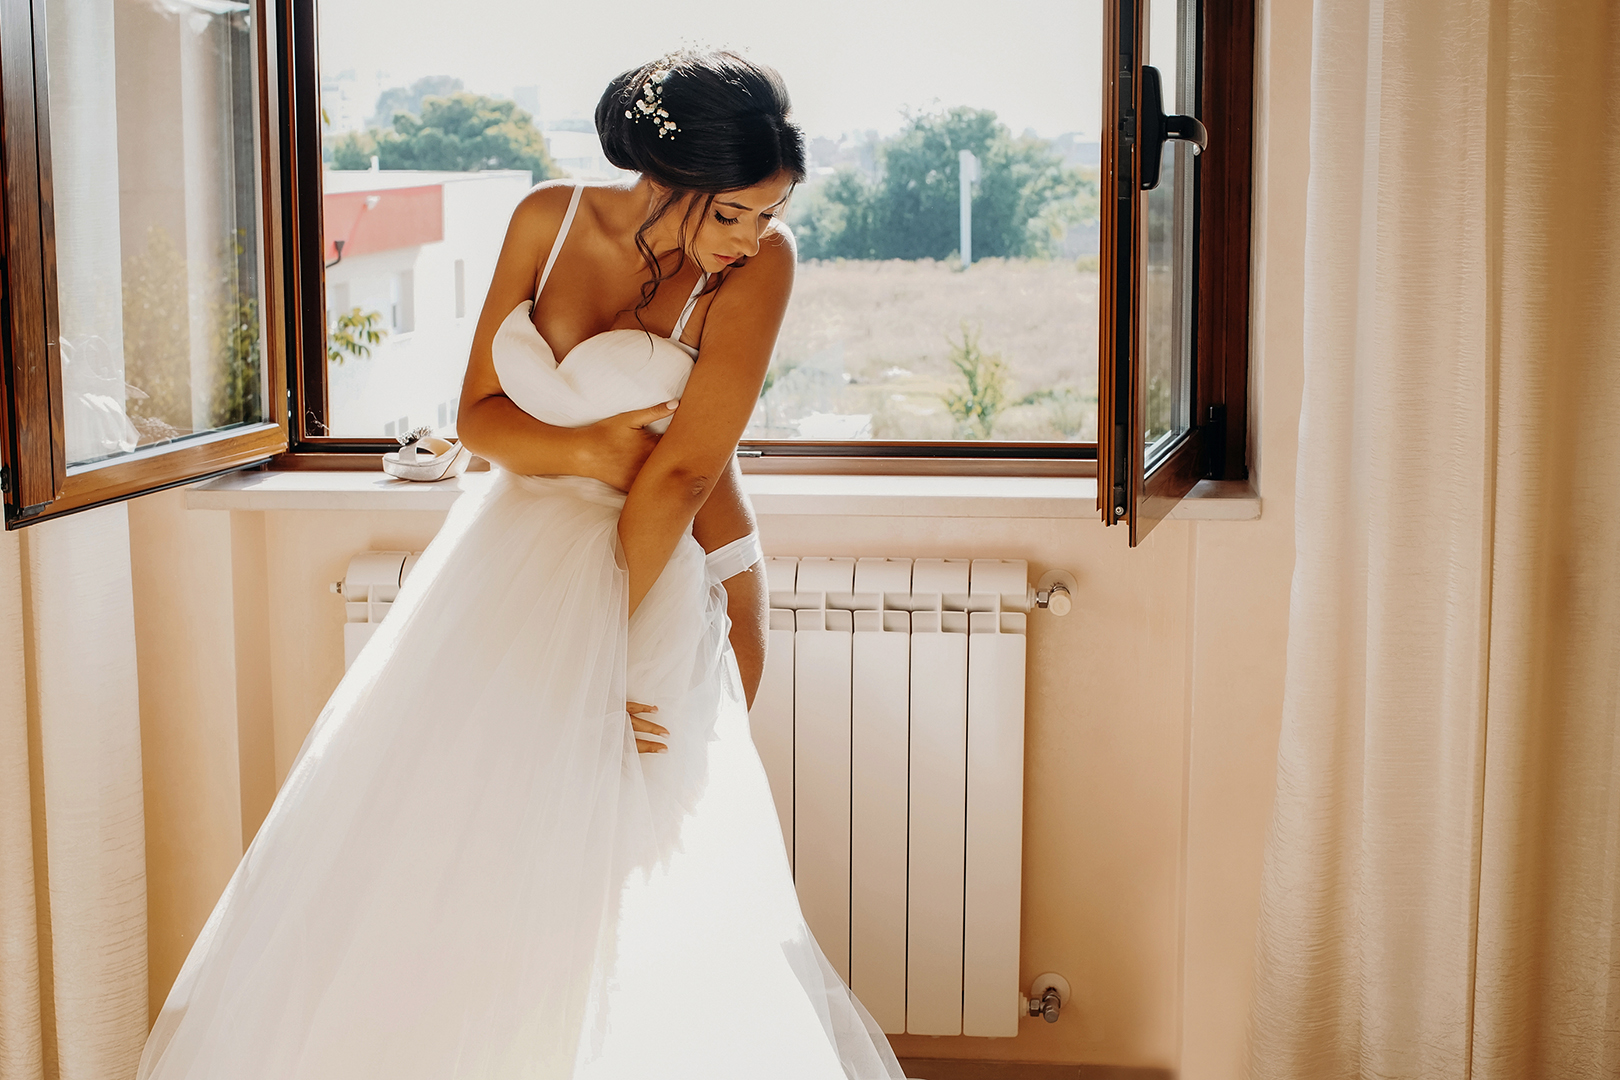 18 gianni-lepore-sposa-bride-weddingdress-dress-abito-preparativi-getting-ready-lucera